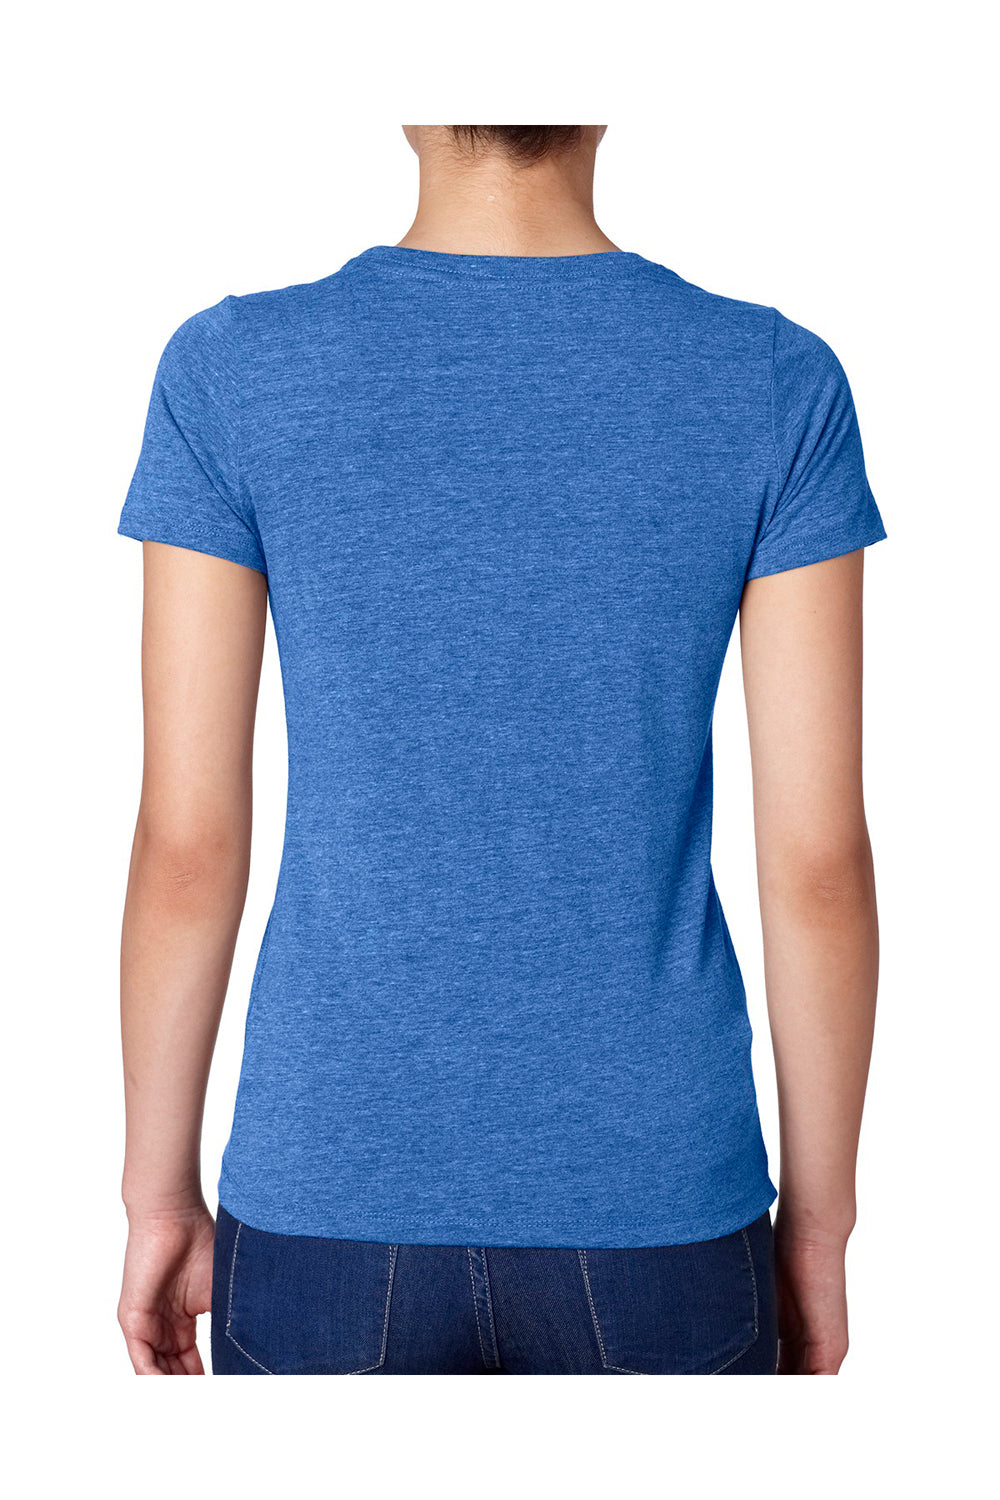 Next Level 6710 Womens Jersey Short Sleeve Crewneck T-Shirt Royal Blue Back